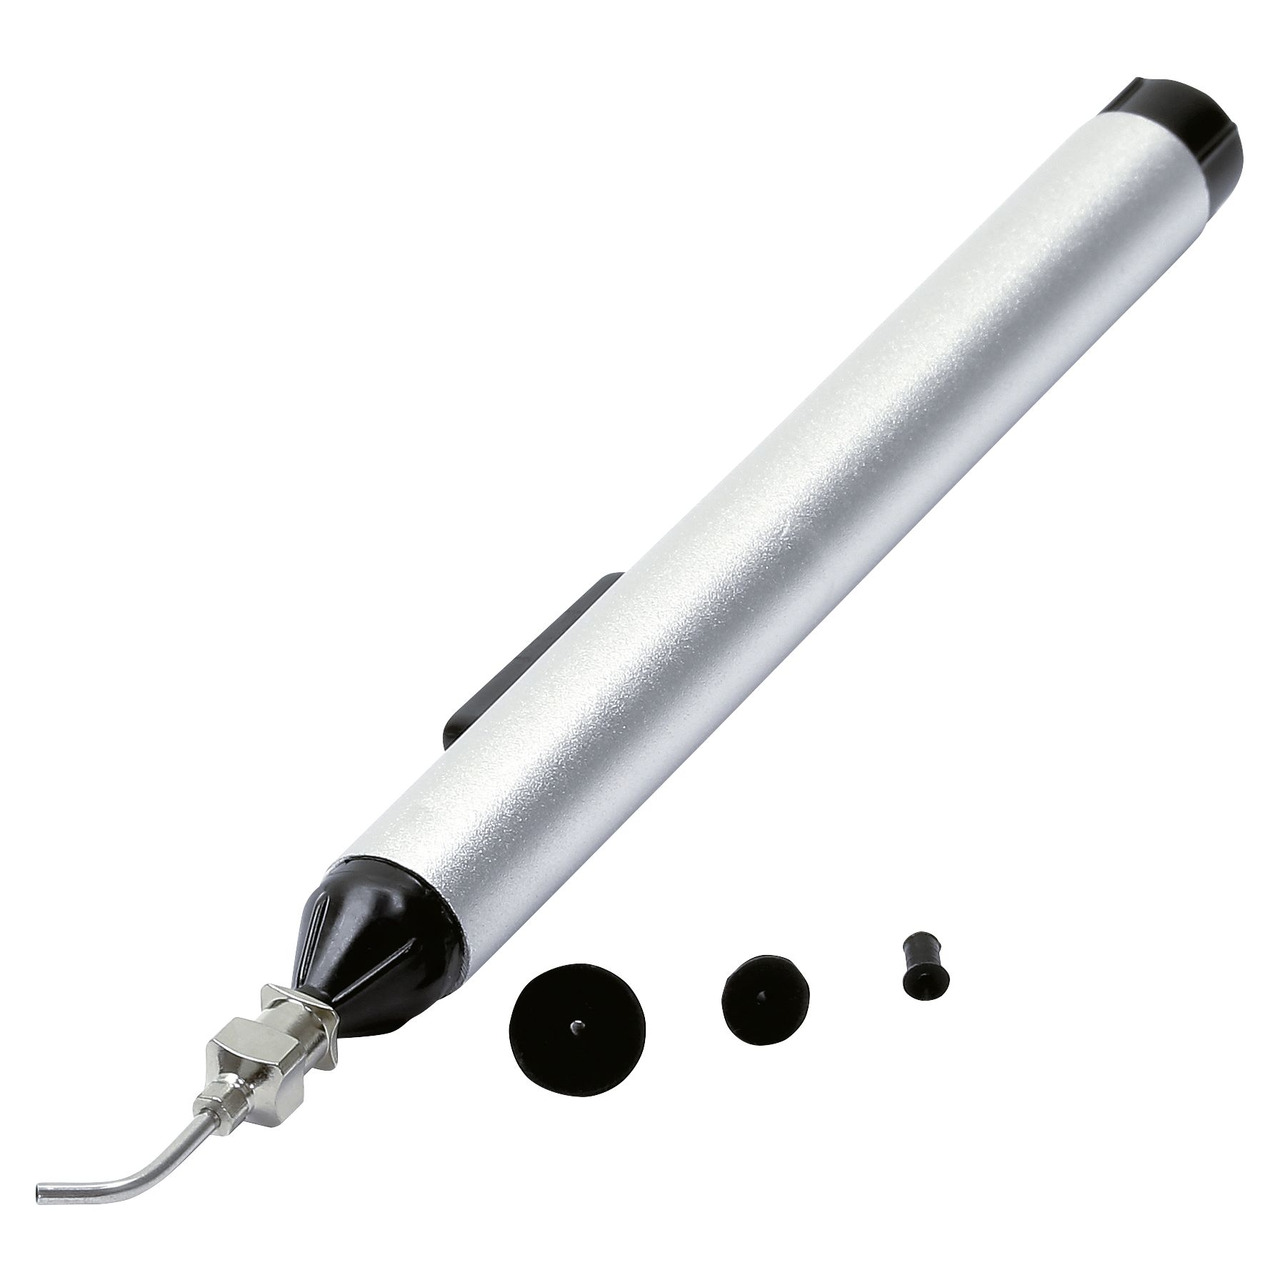 McPower Vakuumstift für ICs- Aluminium-mit 3 Saugnäpfen unter Werkstatt 